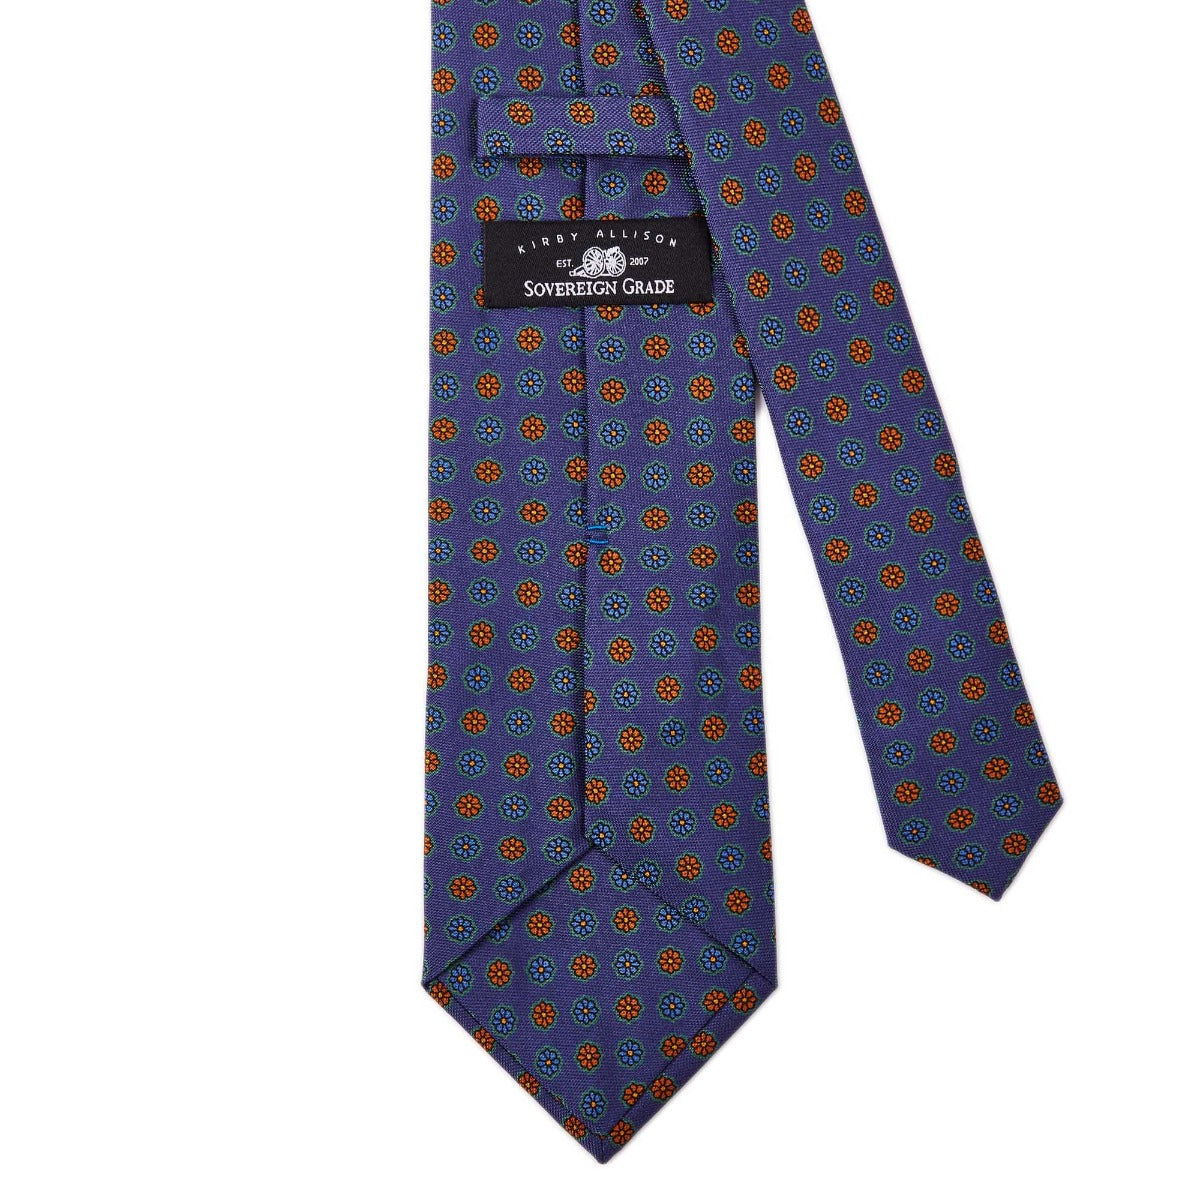 A handmade Sovereign Grade Blue Medallion Jacquard Silk Tie from KirbyAllison.com